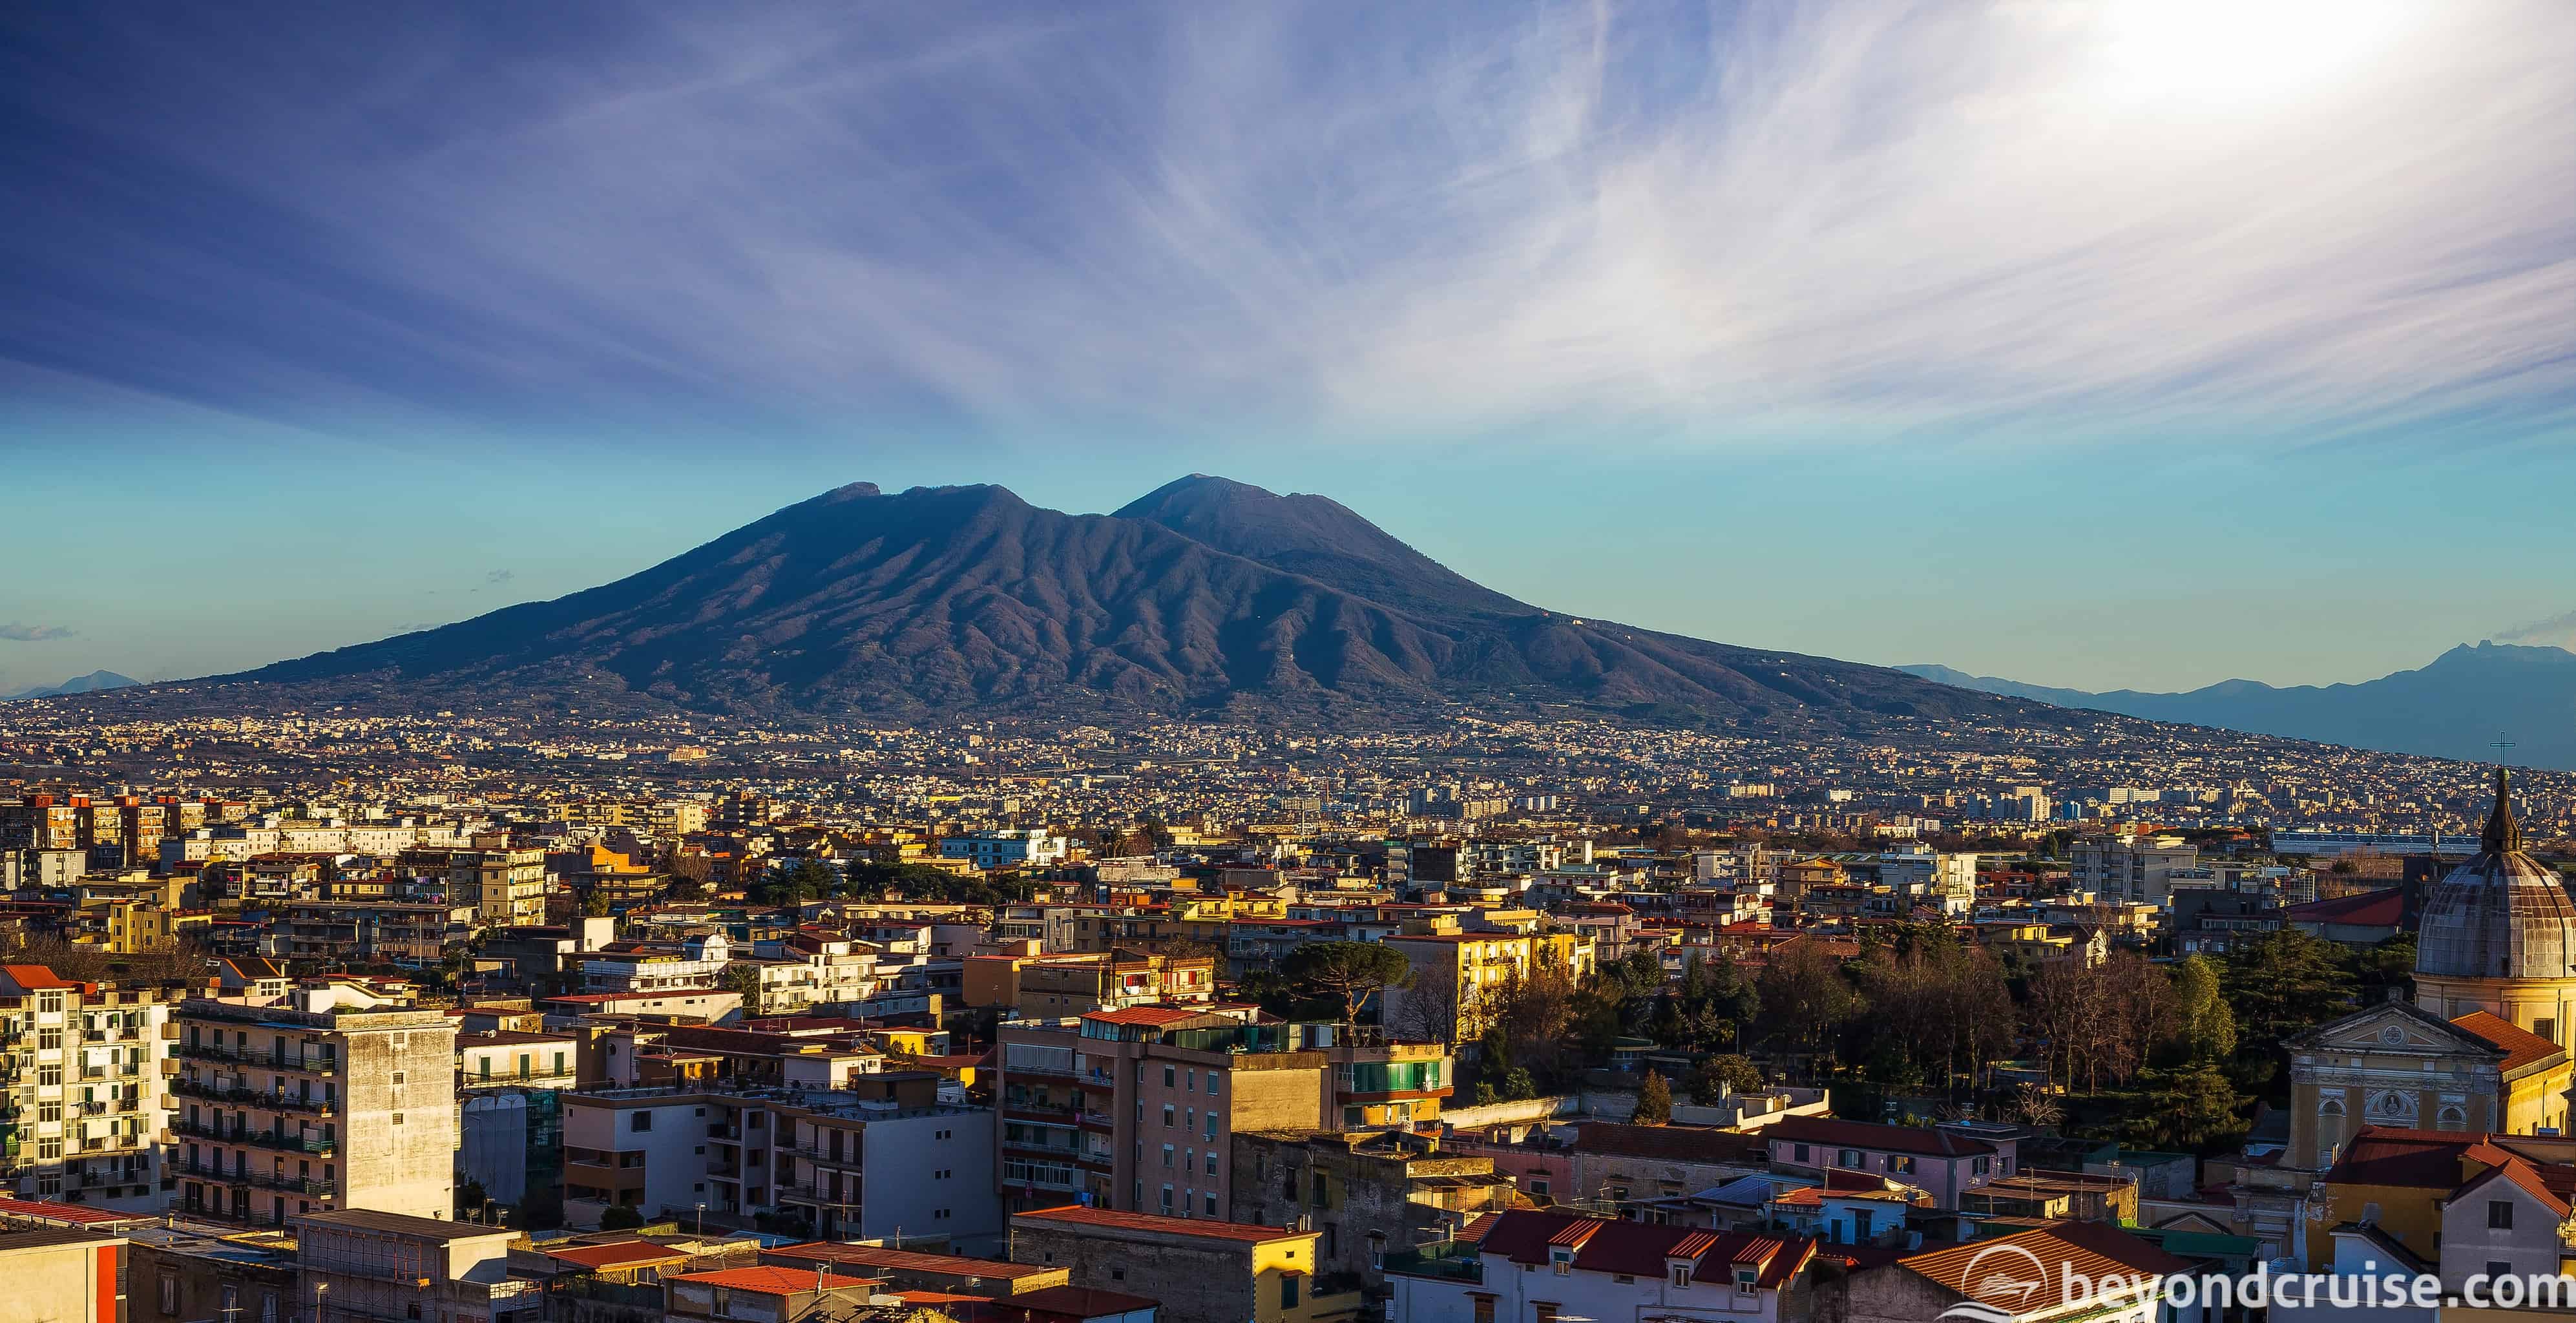 Naples with Mount Vesuvius in the distance